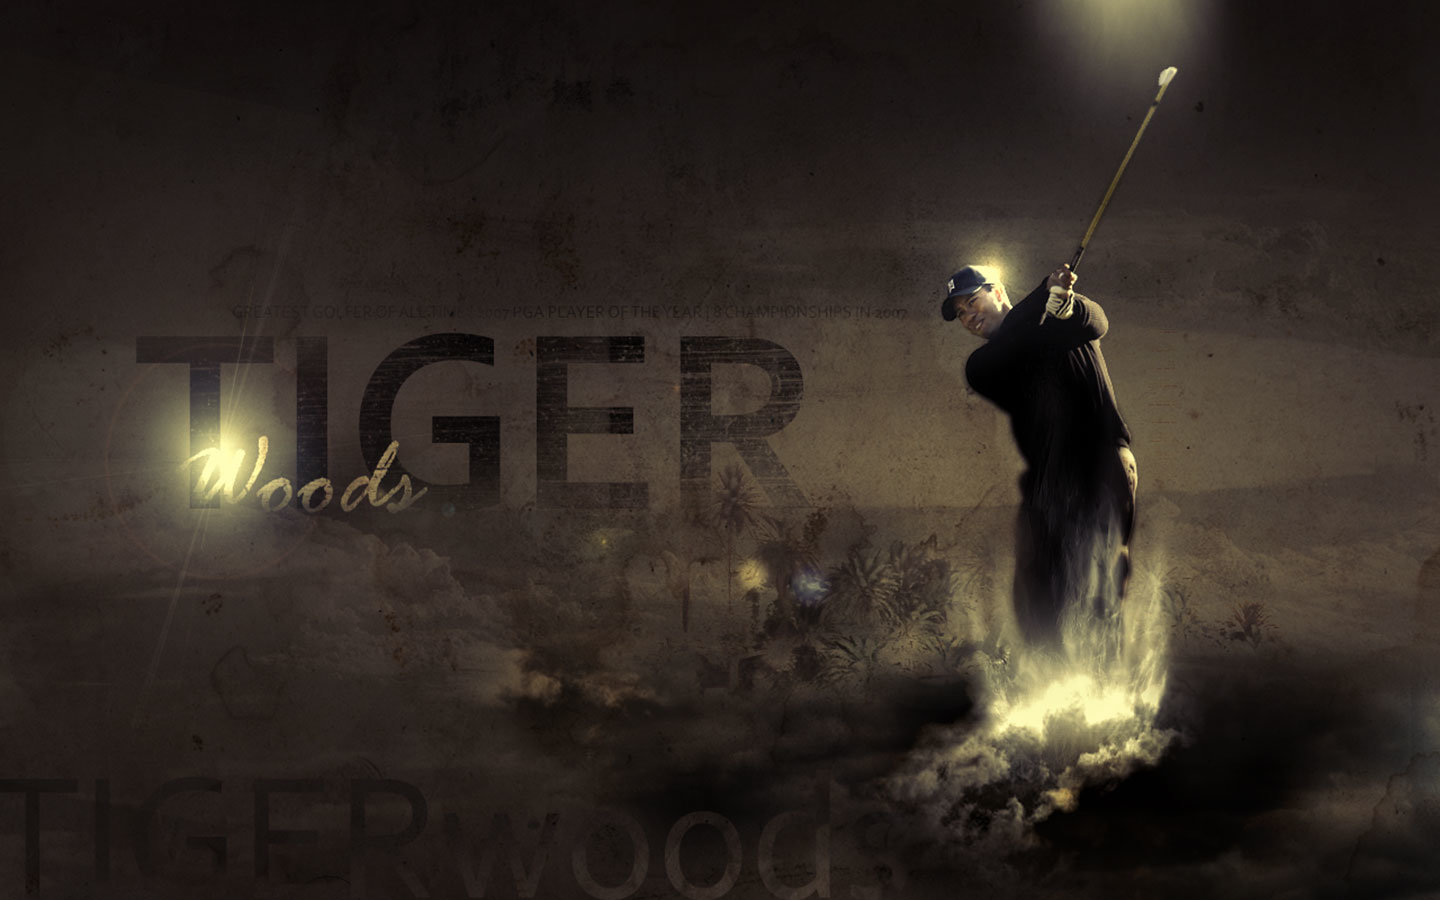 Free Tiger Woods high quality wallpaper ID:8904 for hd 1440x900 desktop